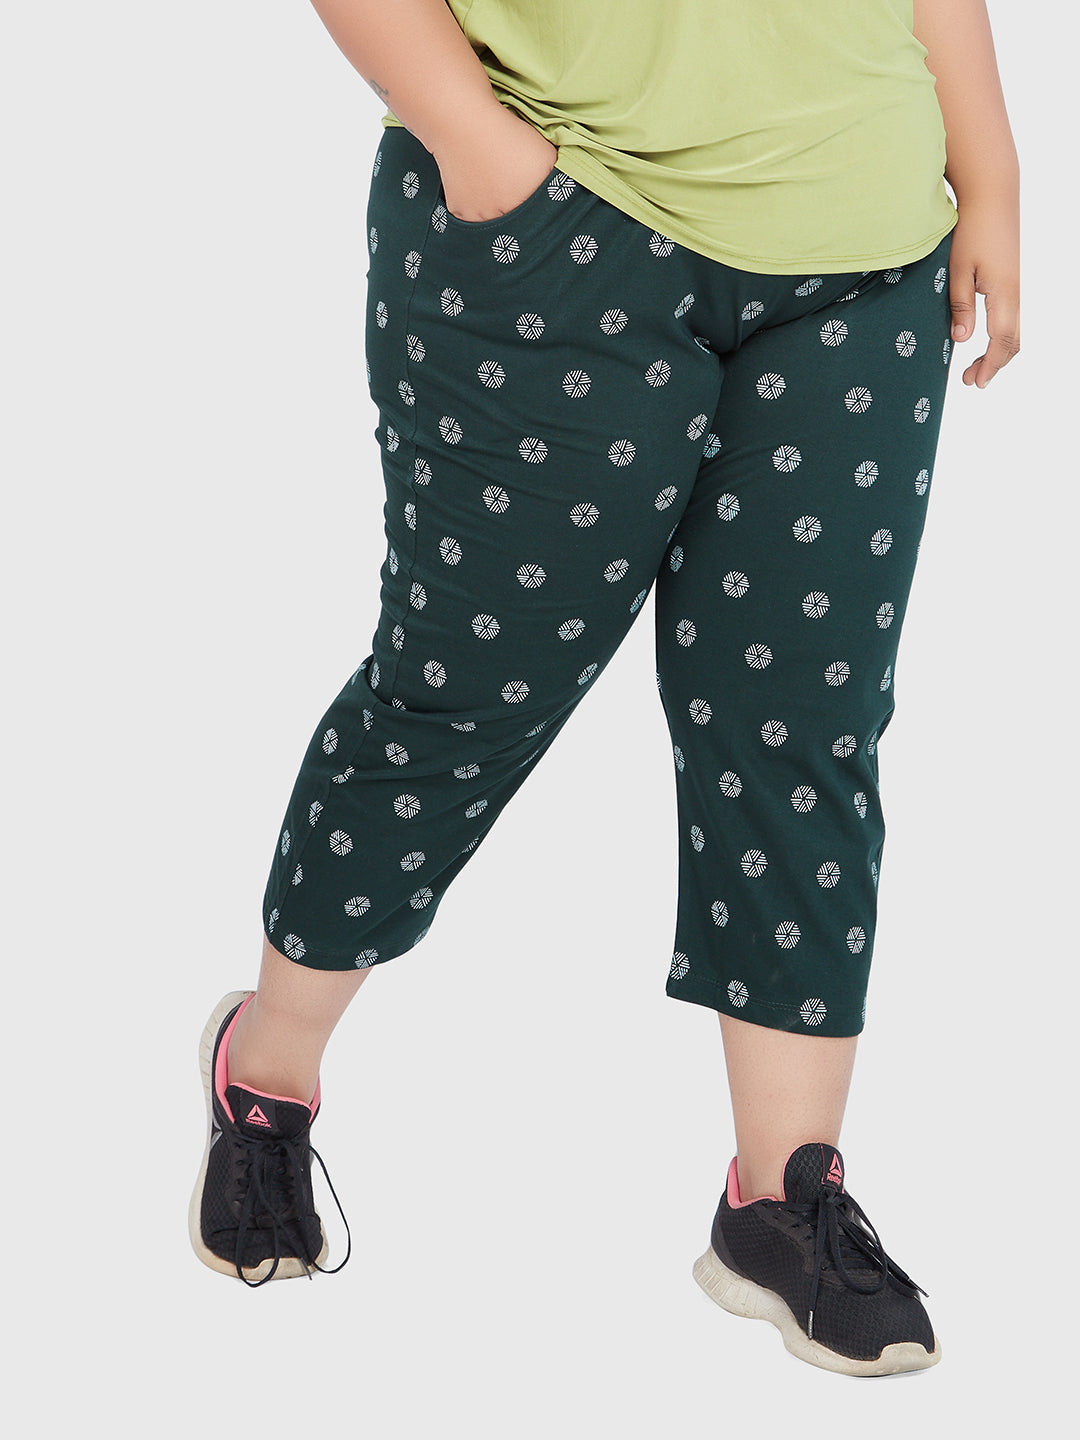 Plus Size Capri For Women - 3/4 Printed Pyjama - Bottle Green